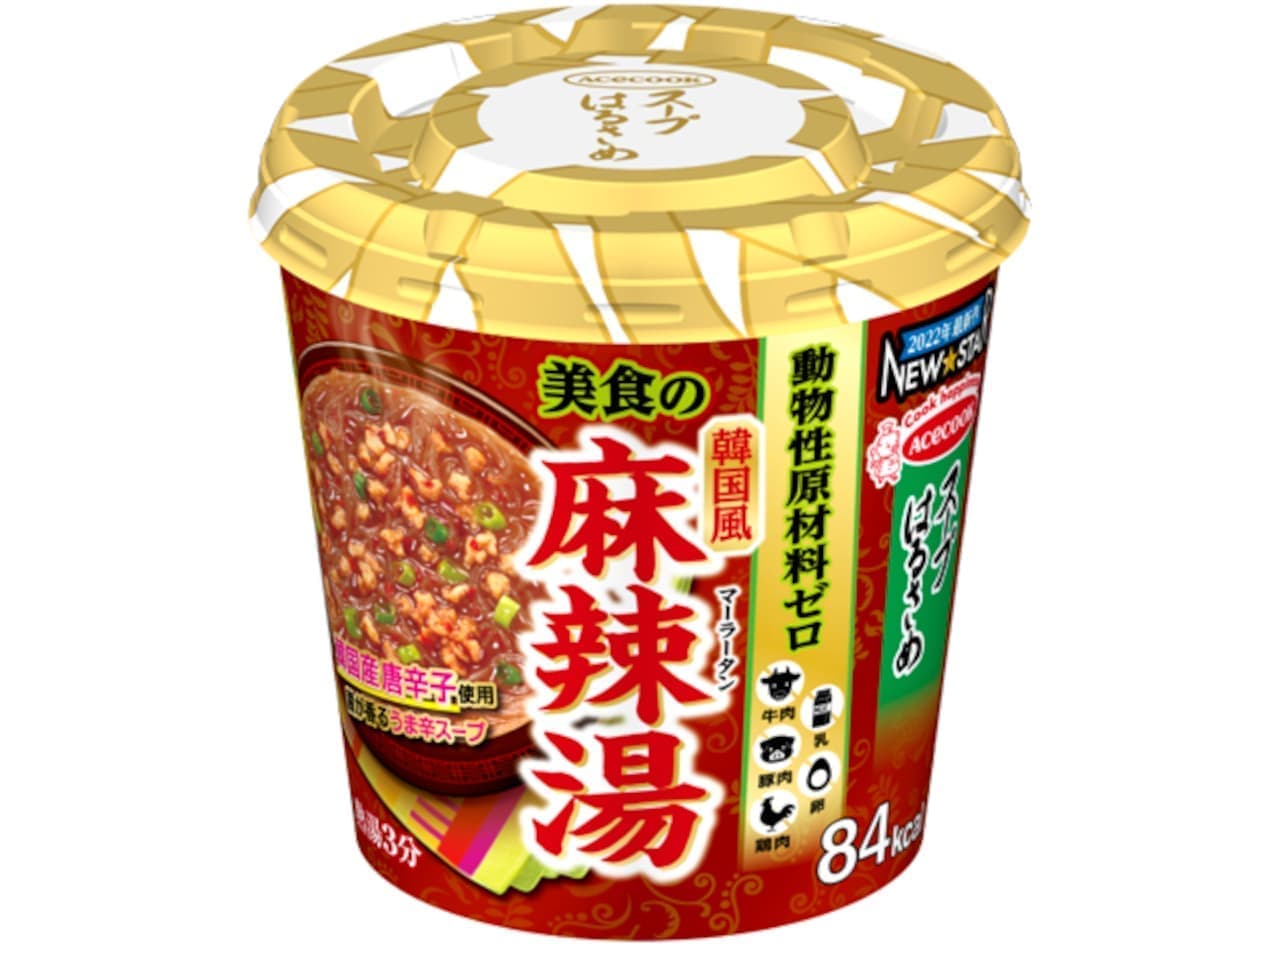 Acecook "Soup Harusame NEWSTAR Korean-style Malatang No Animal Ingredients"